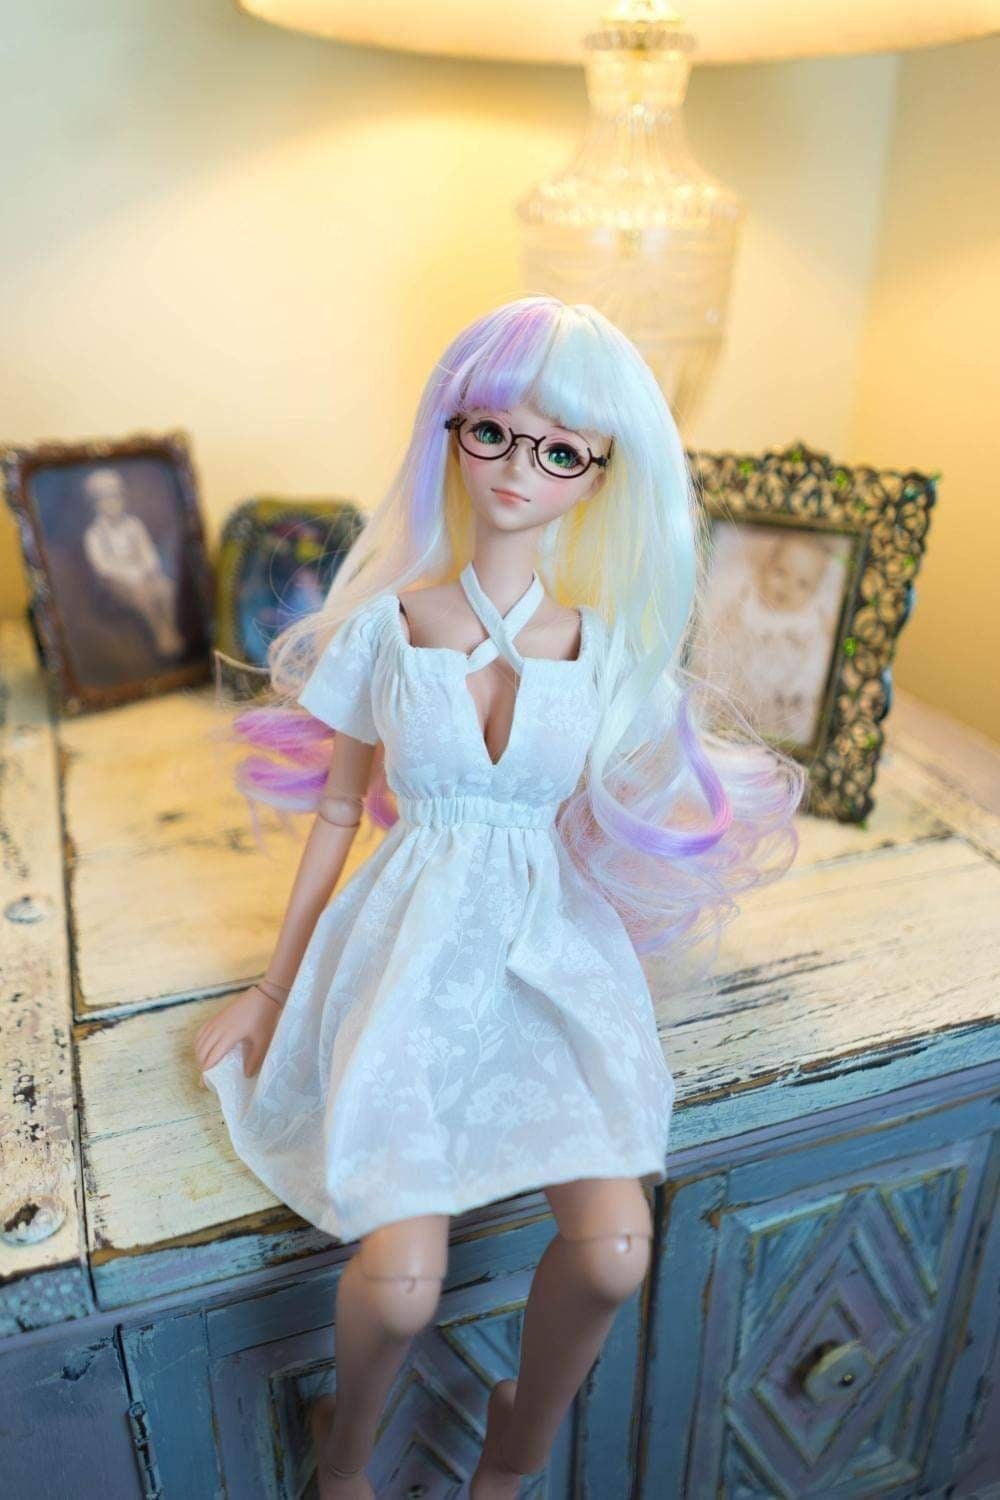 Custom doll WIG for Smart Dolls- Heat Safe - Tangle Resistant- 8.5" head size of Bjd, SD, Dollfie Dream dolls Unicorn